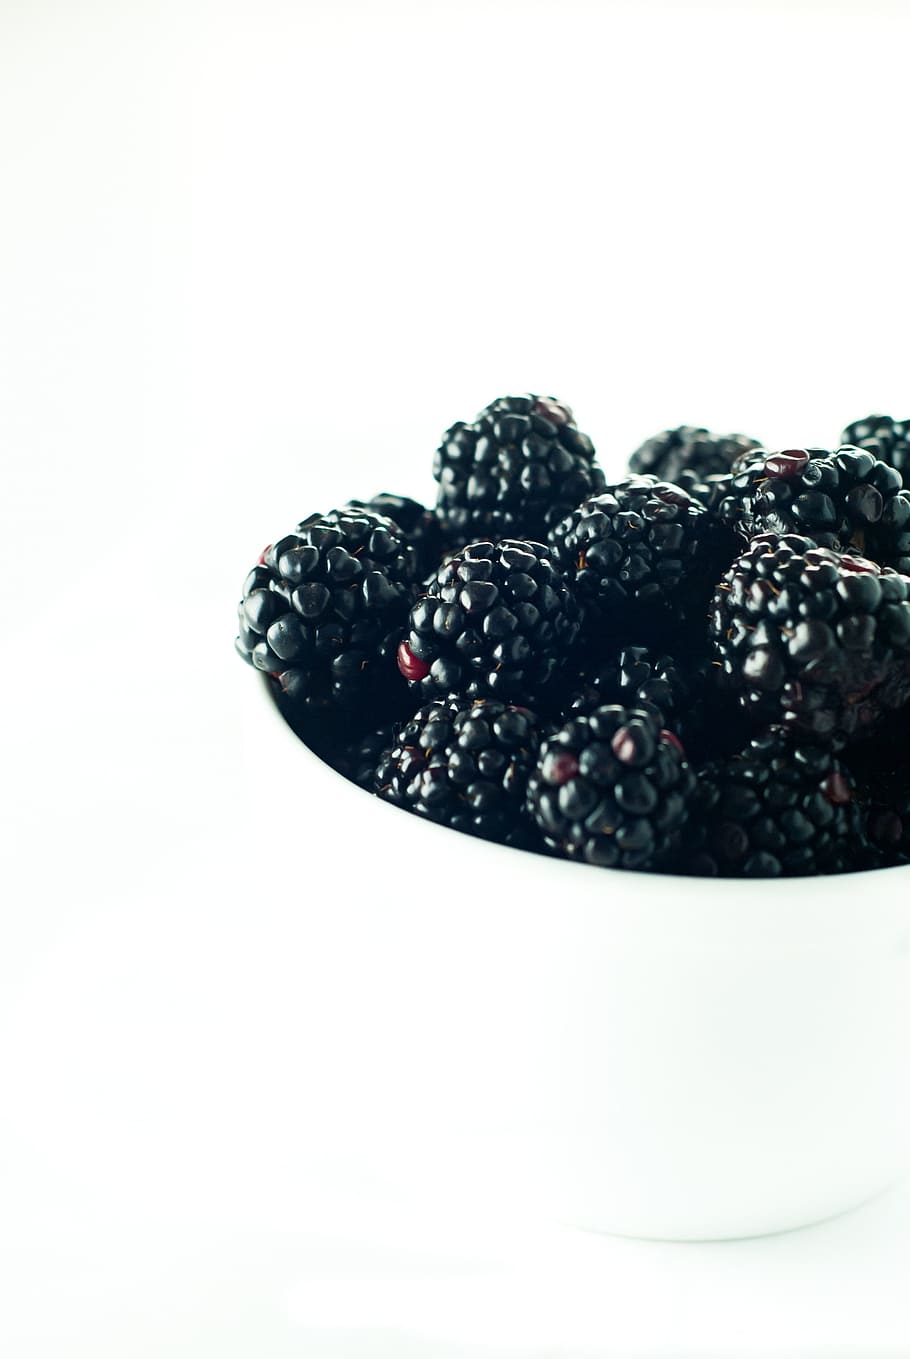 blackberries, berries, berry, black, blackberry, bowl, fresh, white, food, healthy eating